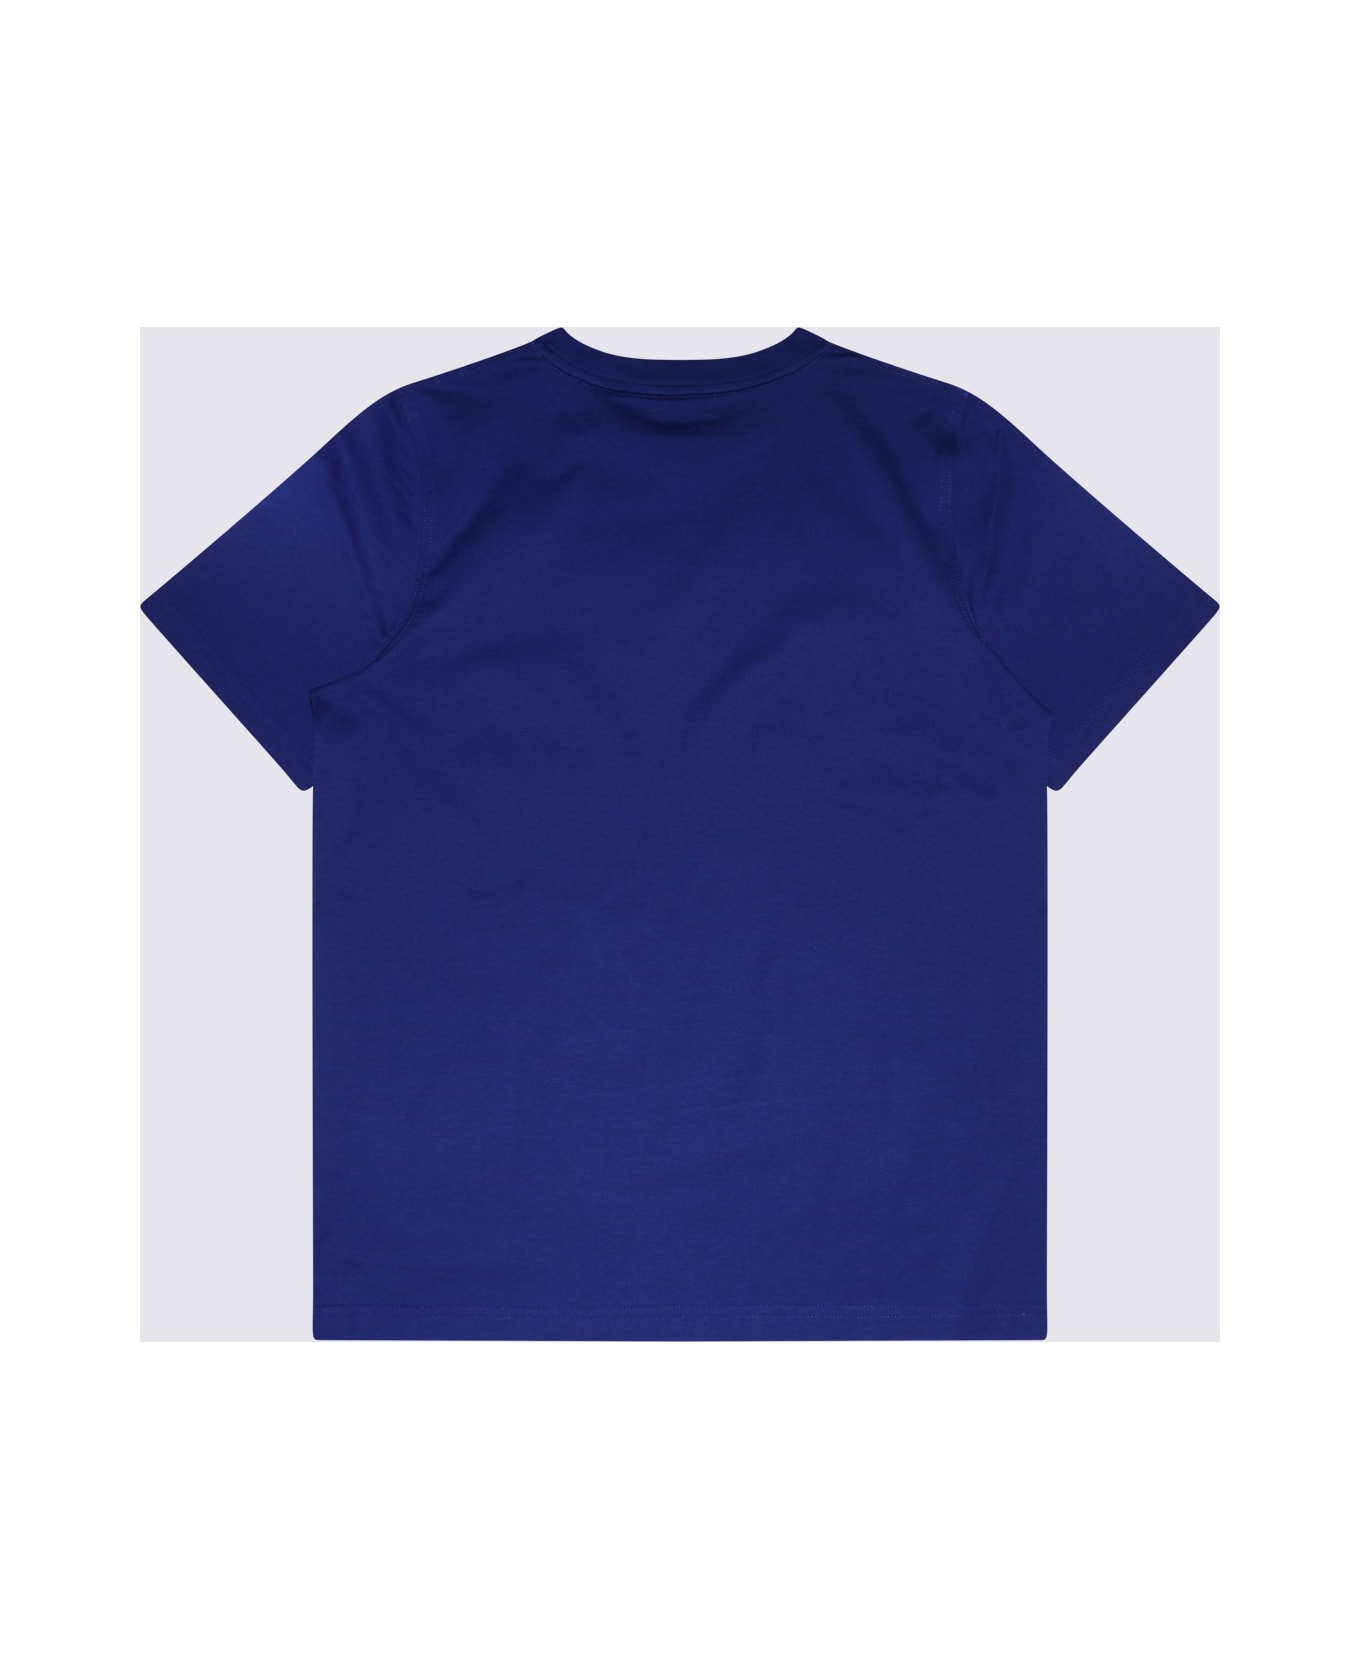 Burberry Blue Cotton T-shirt - KNIGHT